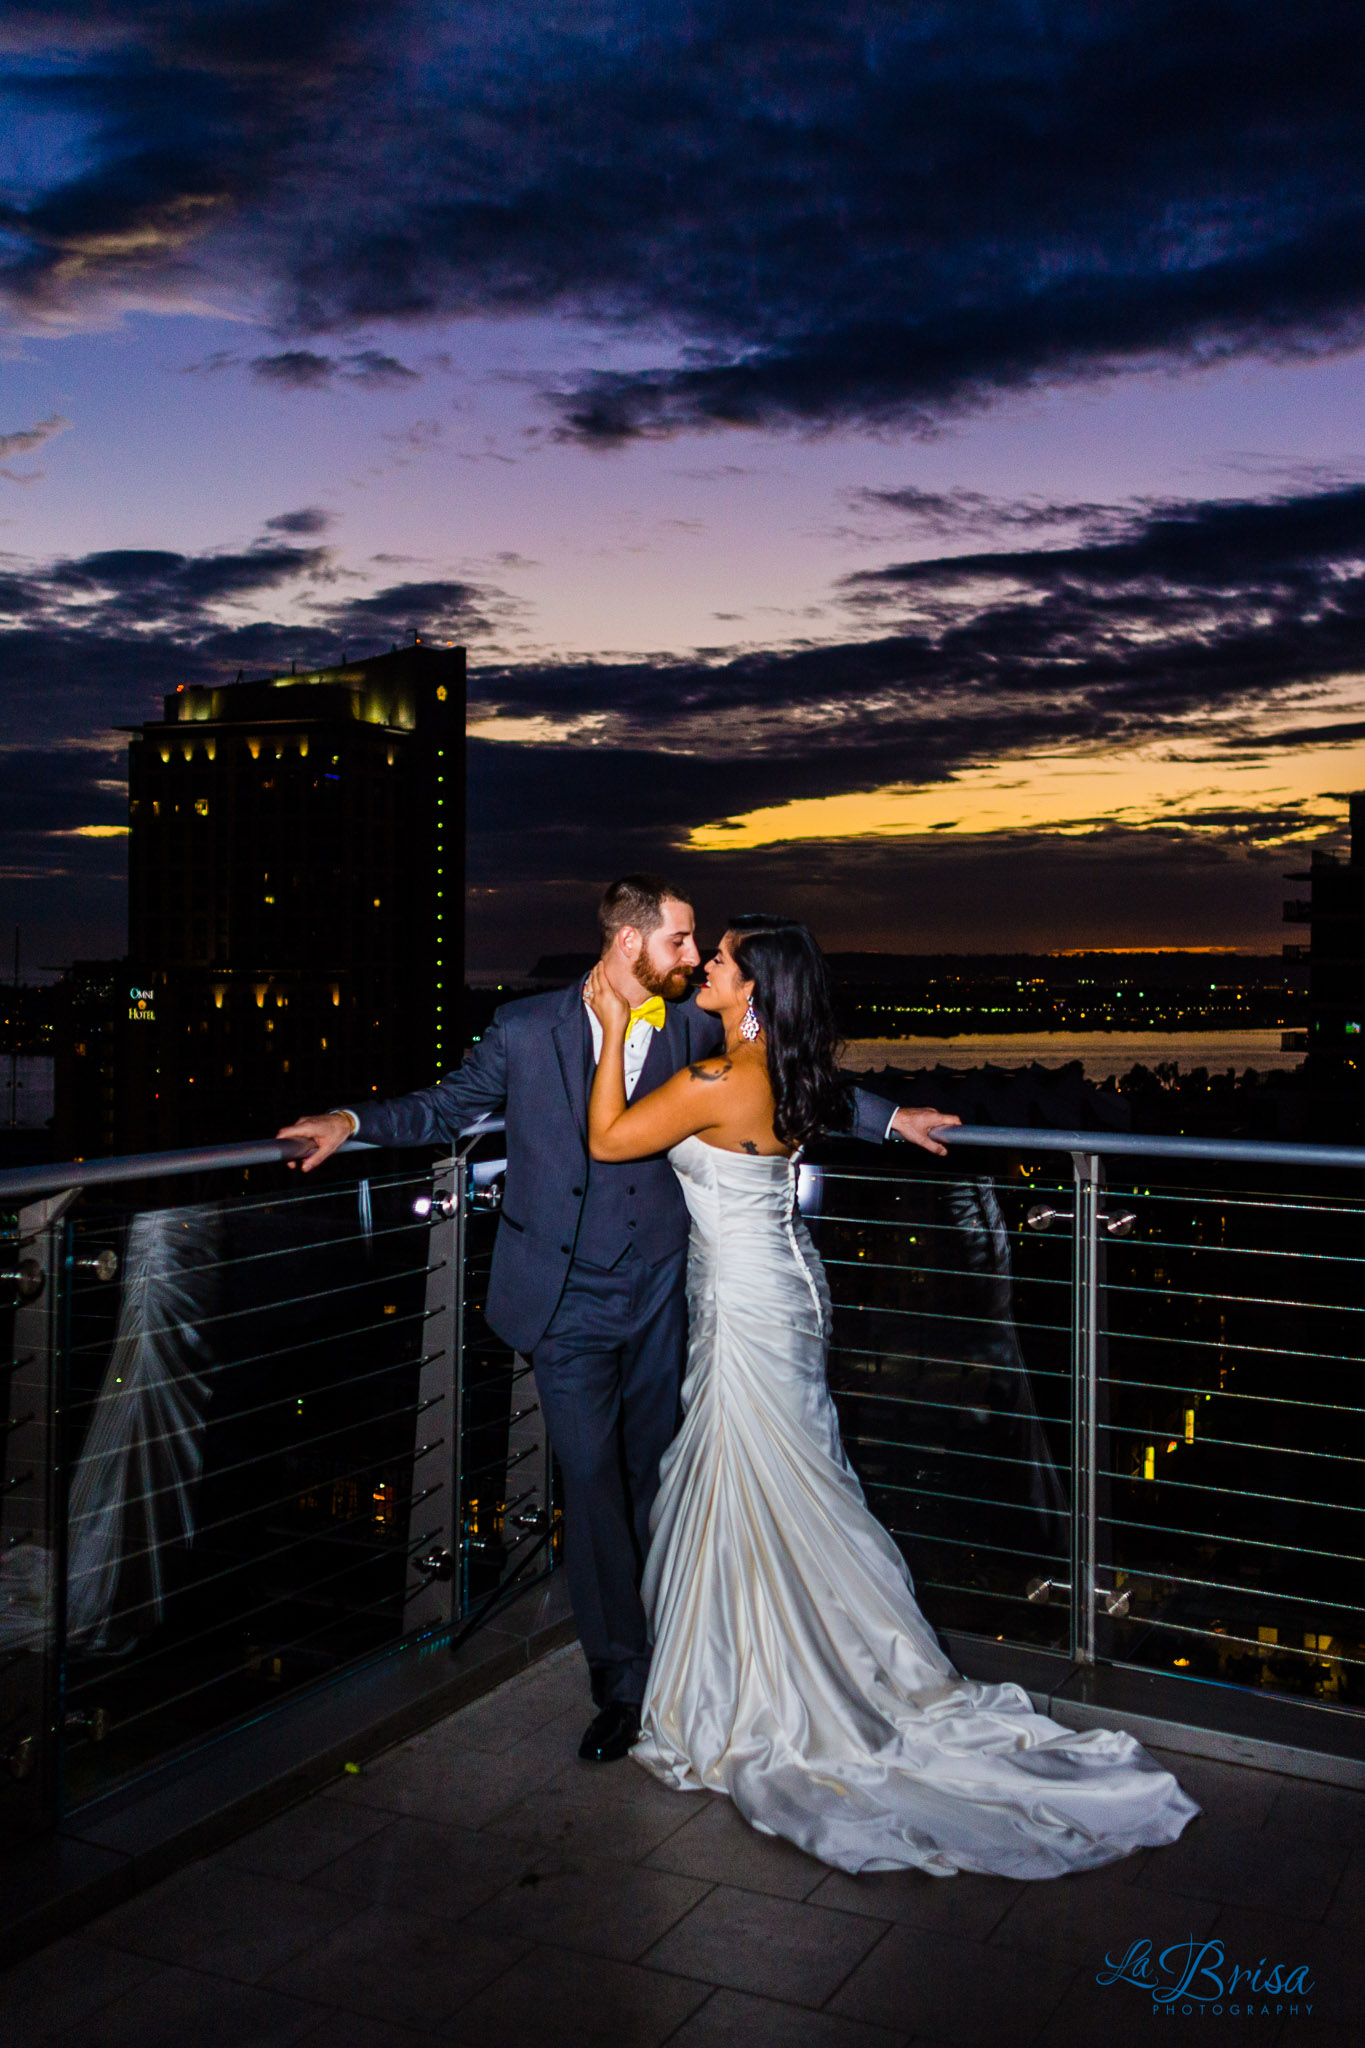 Carolyn & Cody | Wedding Photography Preview | San Diego, CA | Chris Hsieh